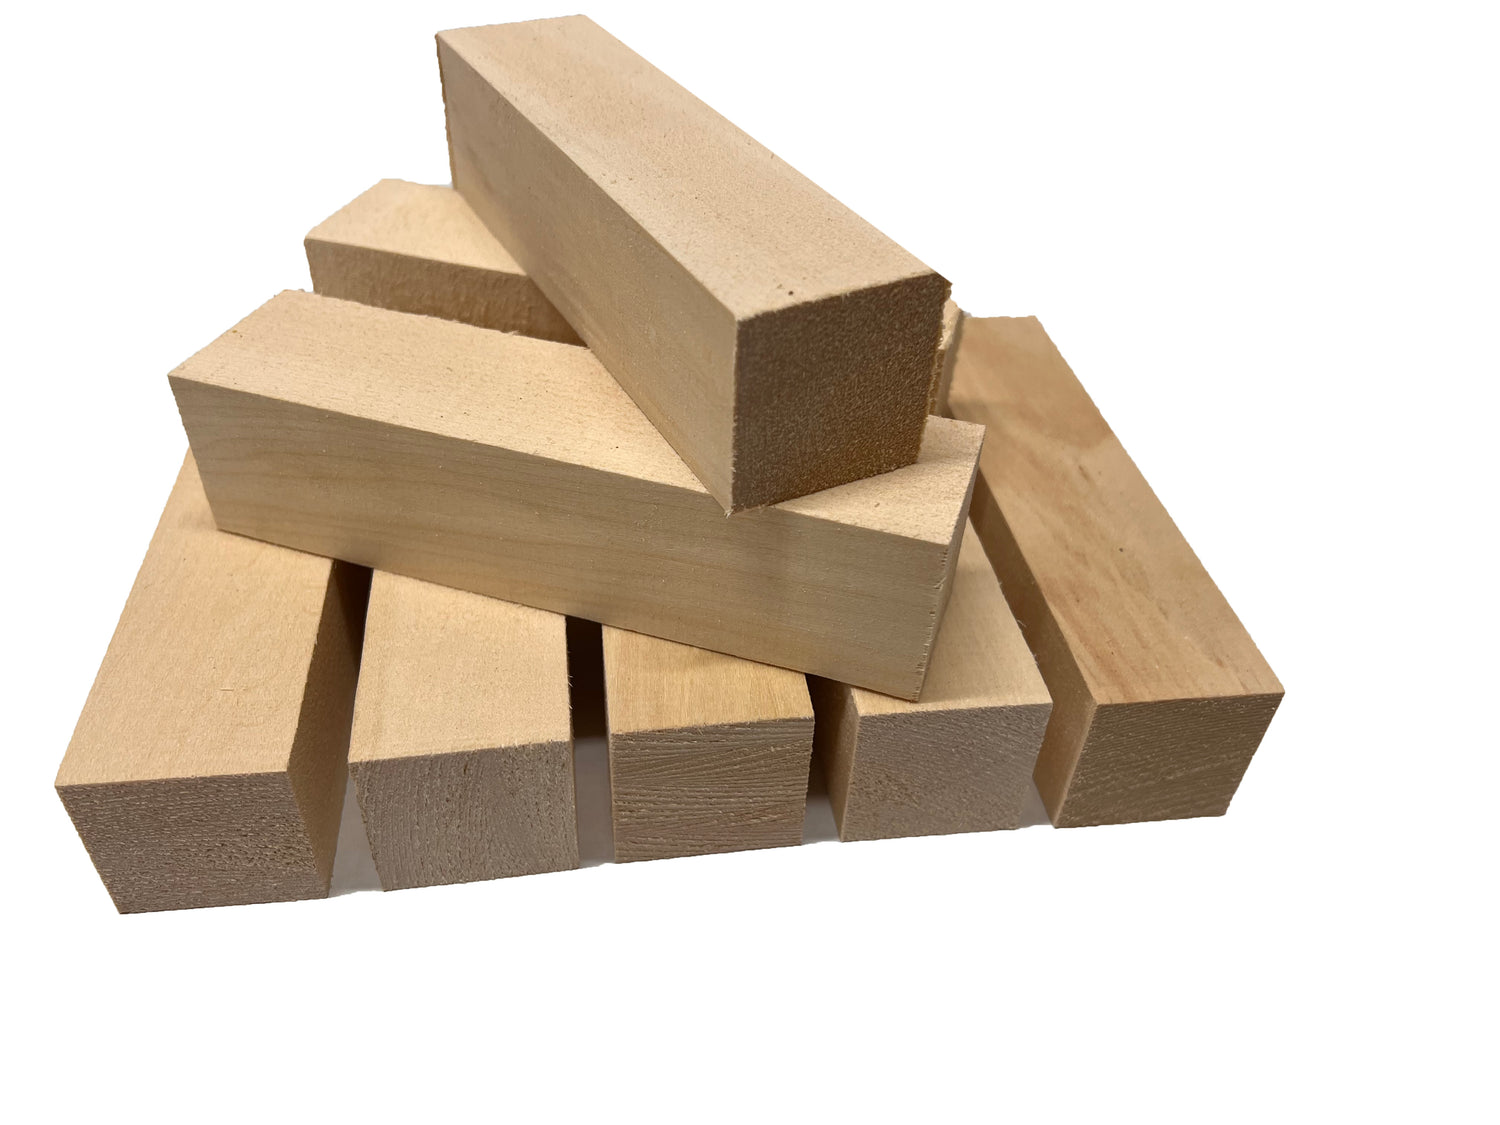 Basswood Carving Blocks, Basswood Carving Wood, Basswood Wood Block